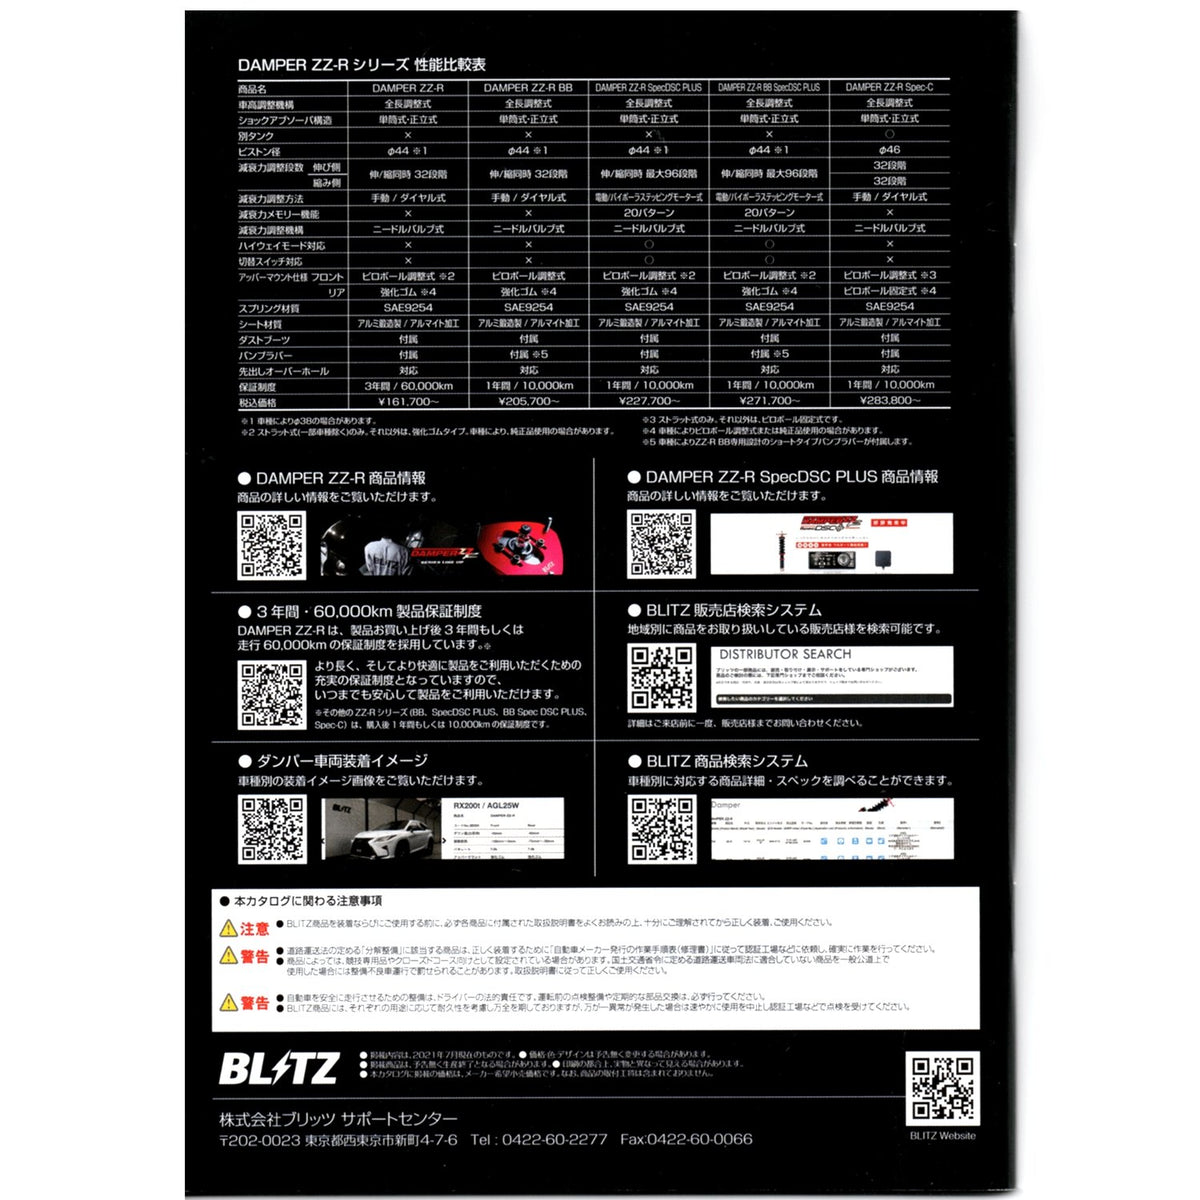 New JDM BLITZ Footwork Perfect Mini Catalog Brochure 2021 Vol.2 - Sugoi JDM